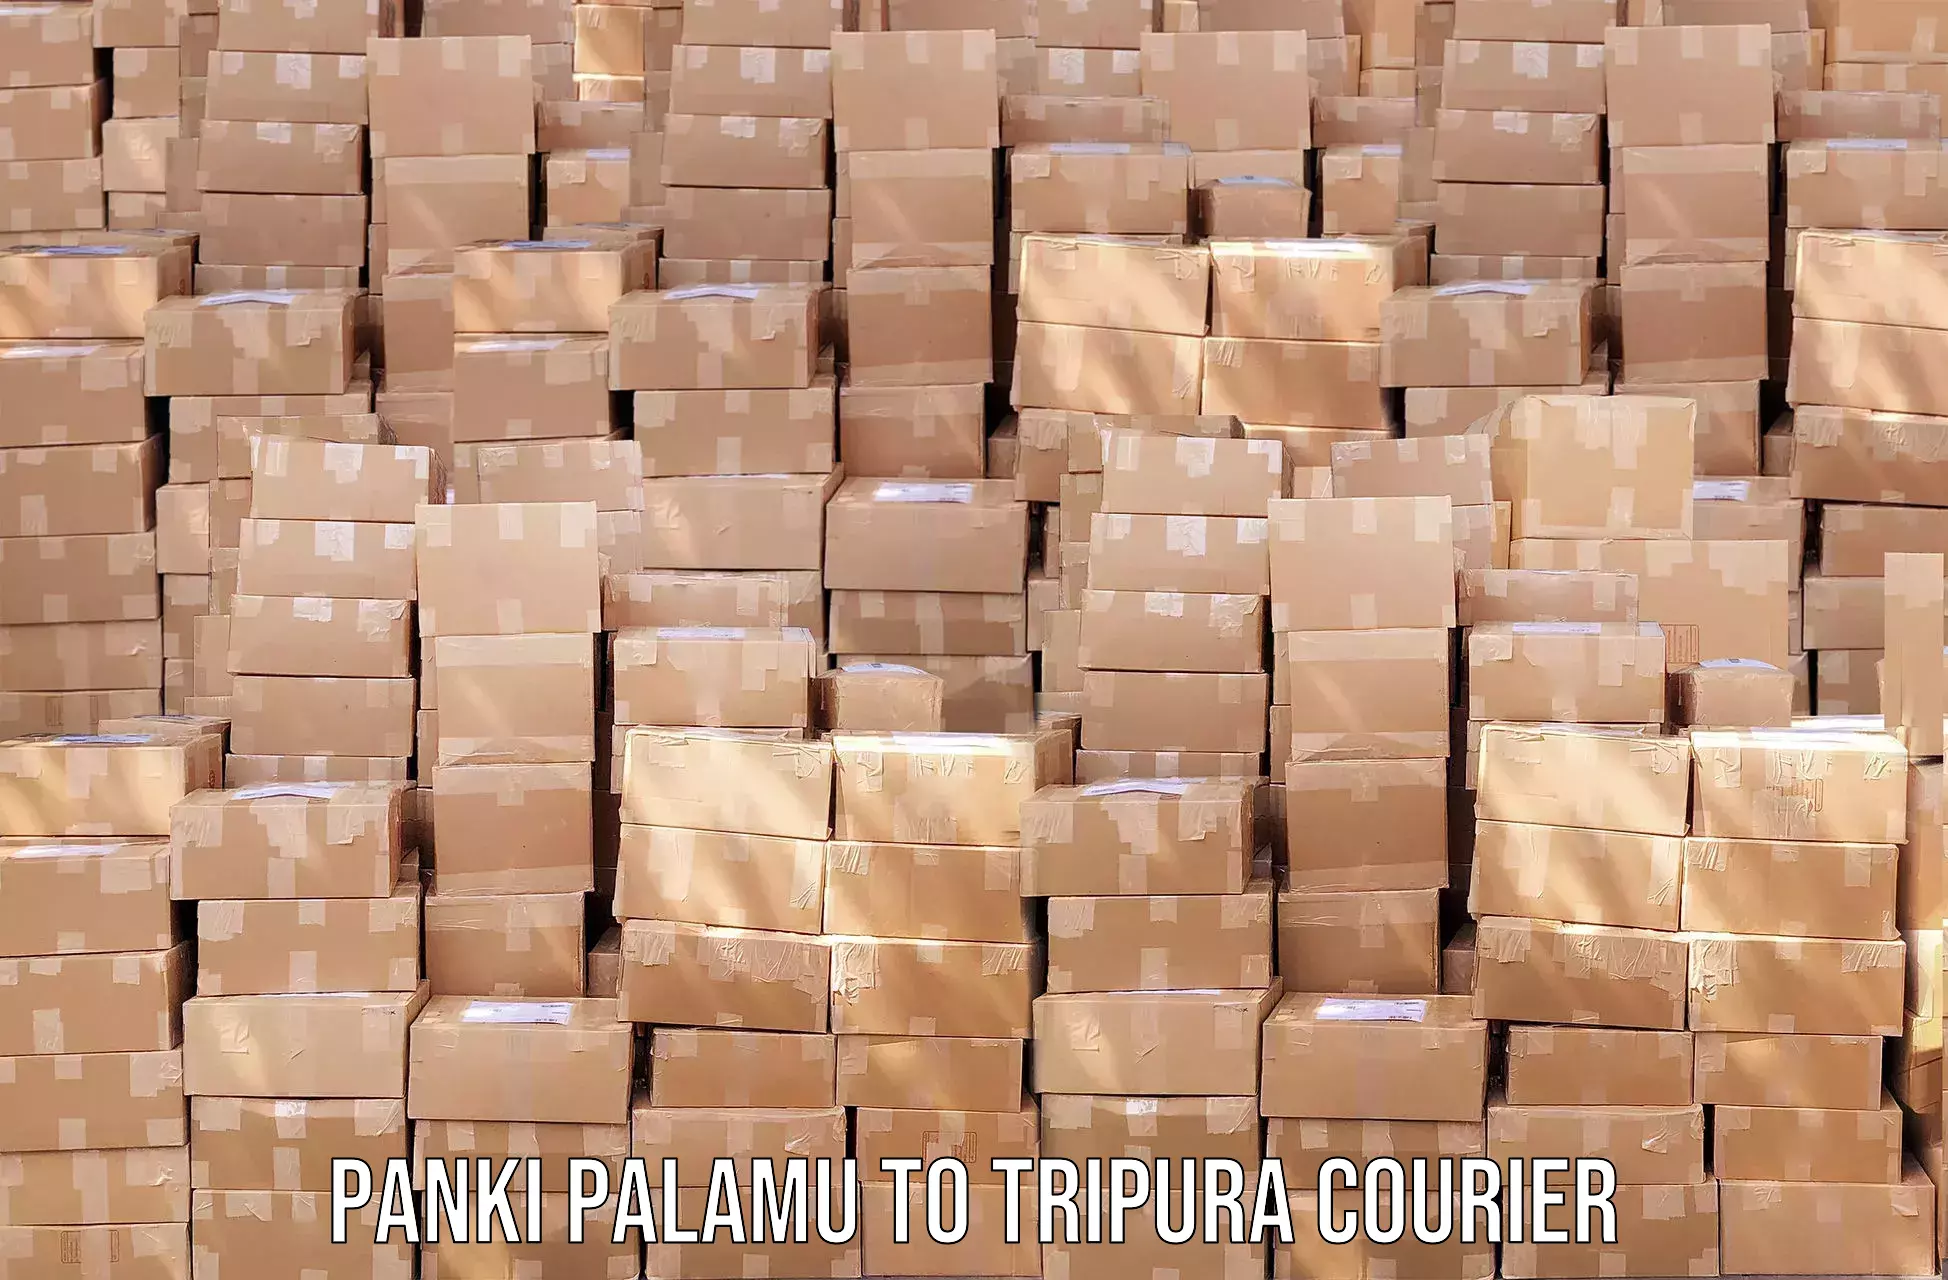 High-speed parcel service Panki Palamu to Aambasa